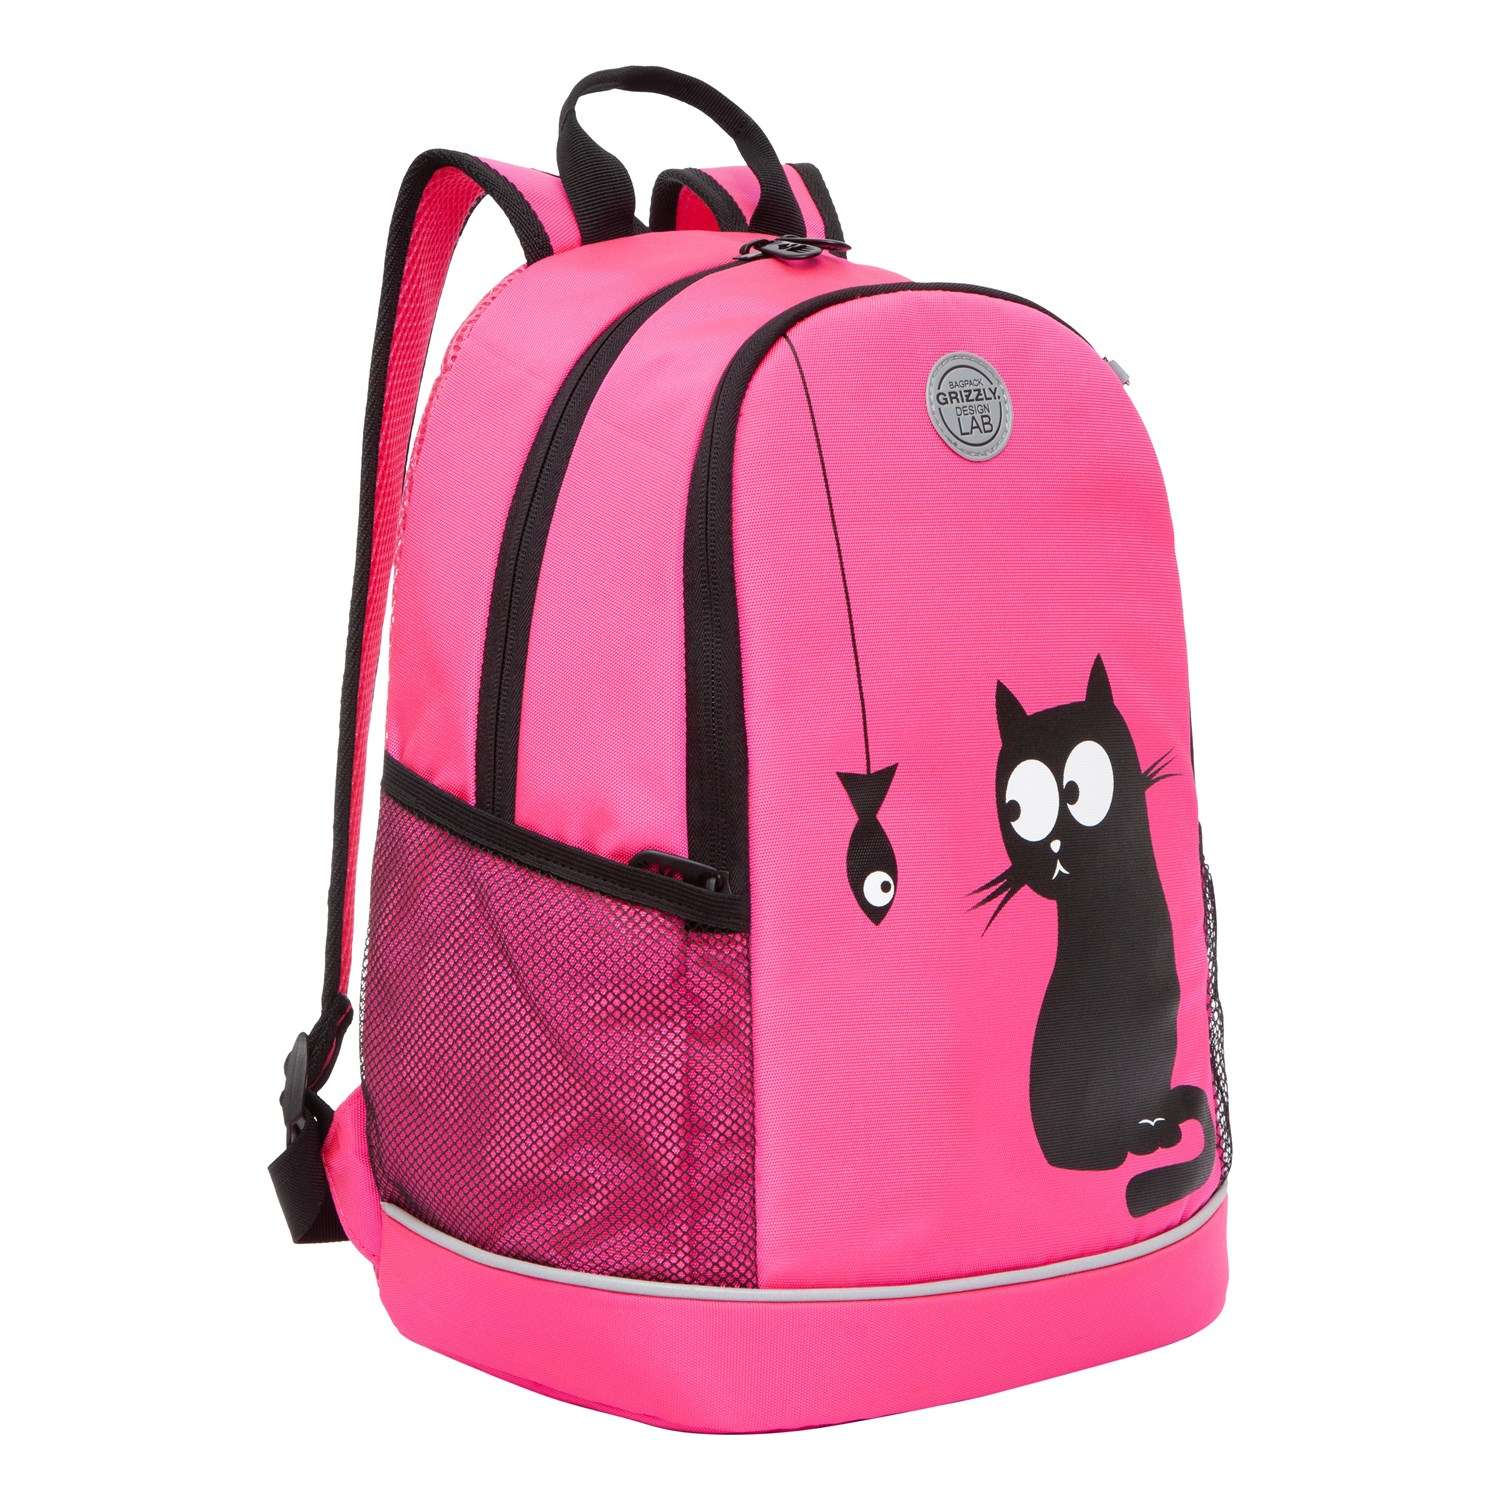 Рюкзак школьный Grizzly Ярко-розовый RG-263-4/1 - фото 1